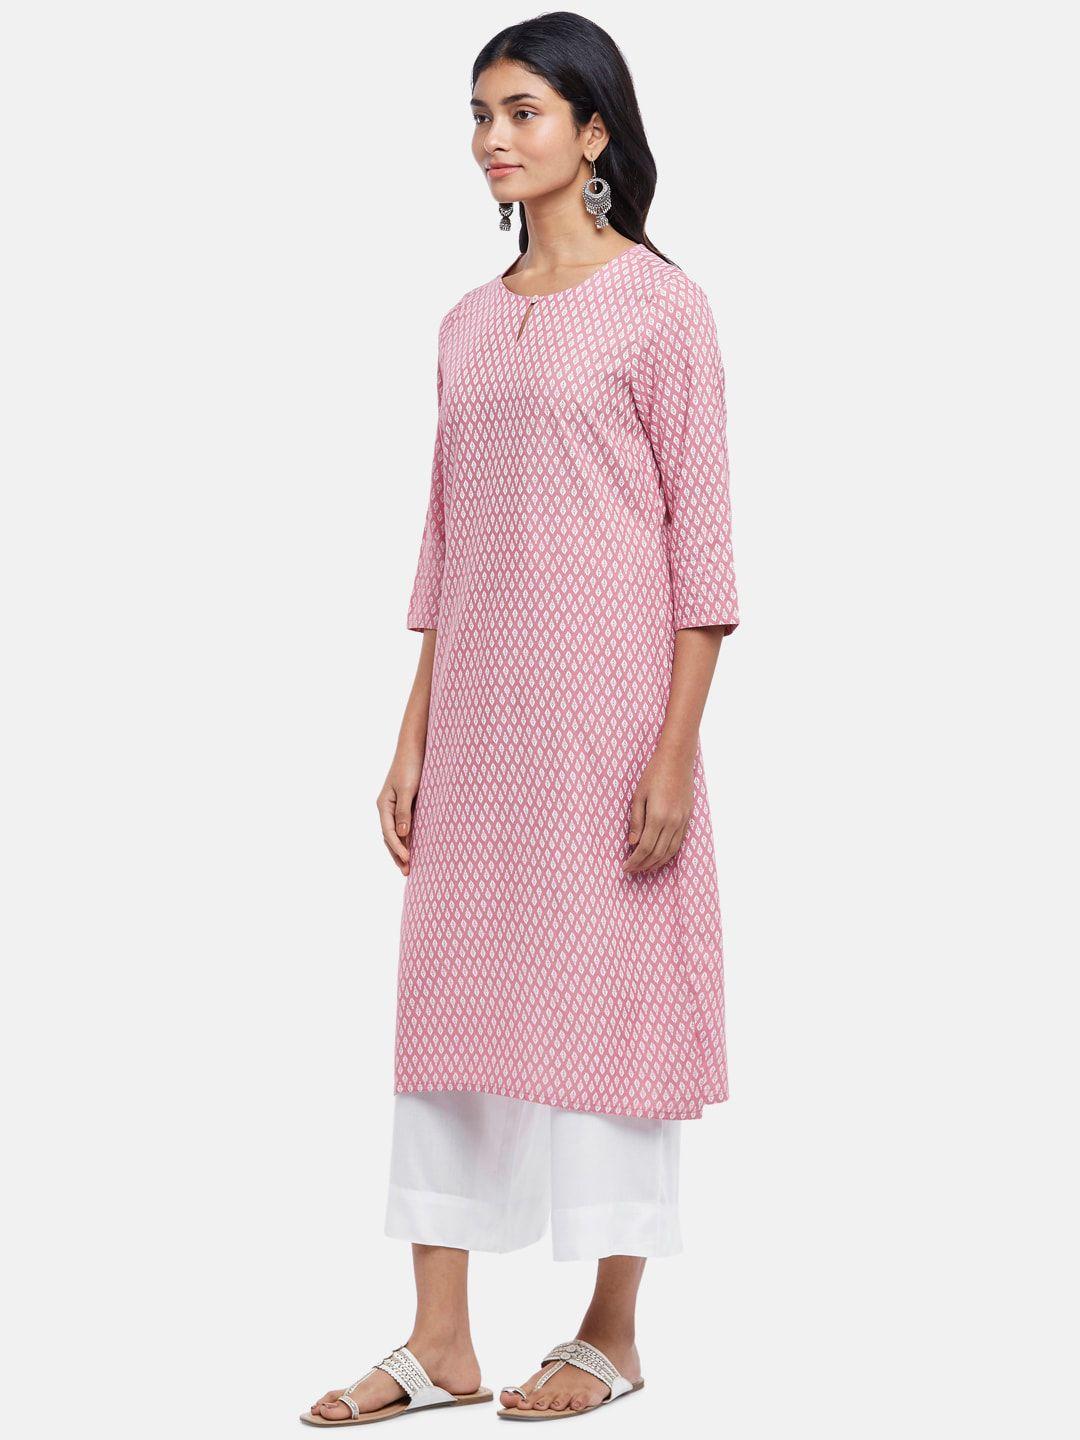 rangmanch-by-pantaloons-women-pink-ethnic-motifs-printed-kurta-with-palazzos